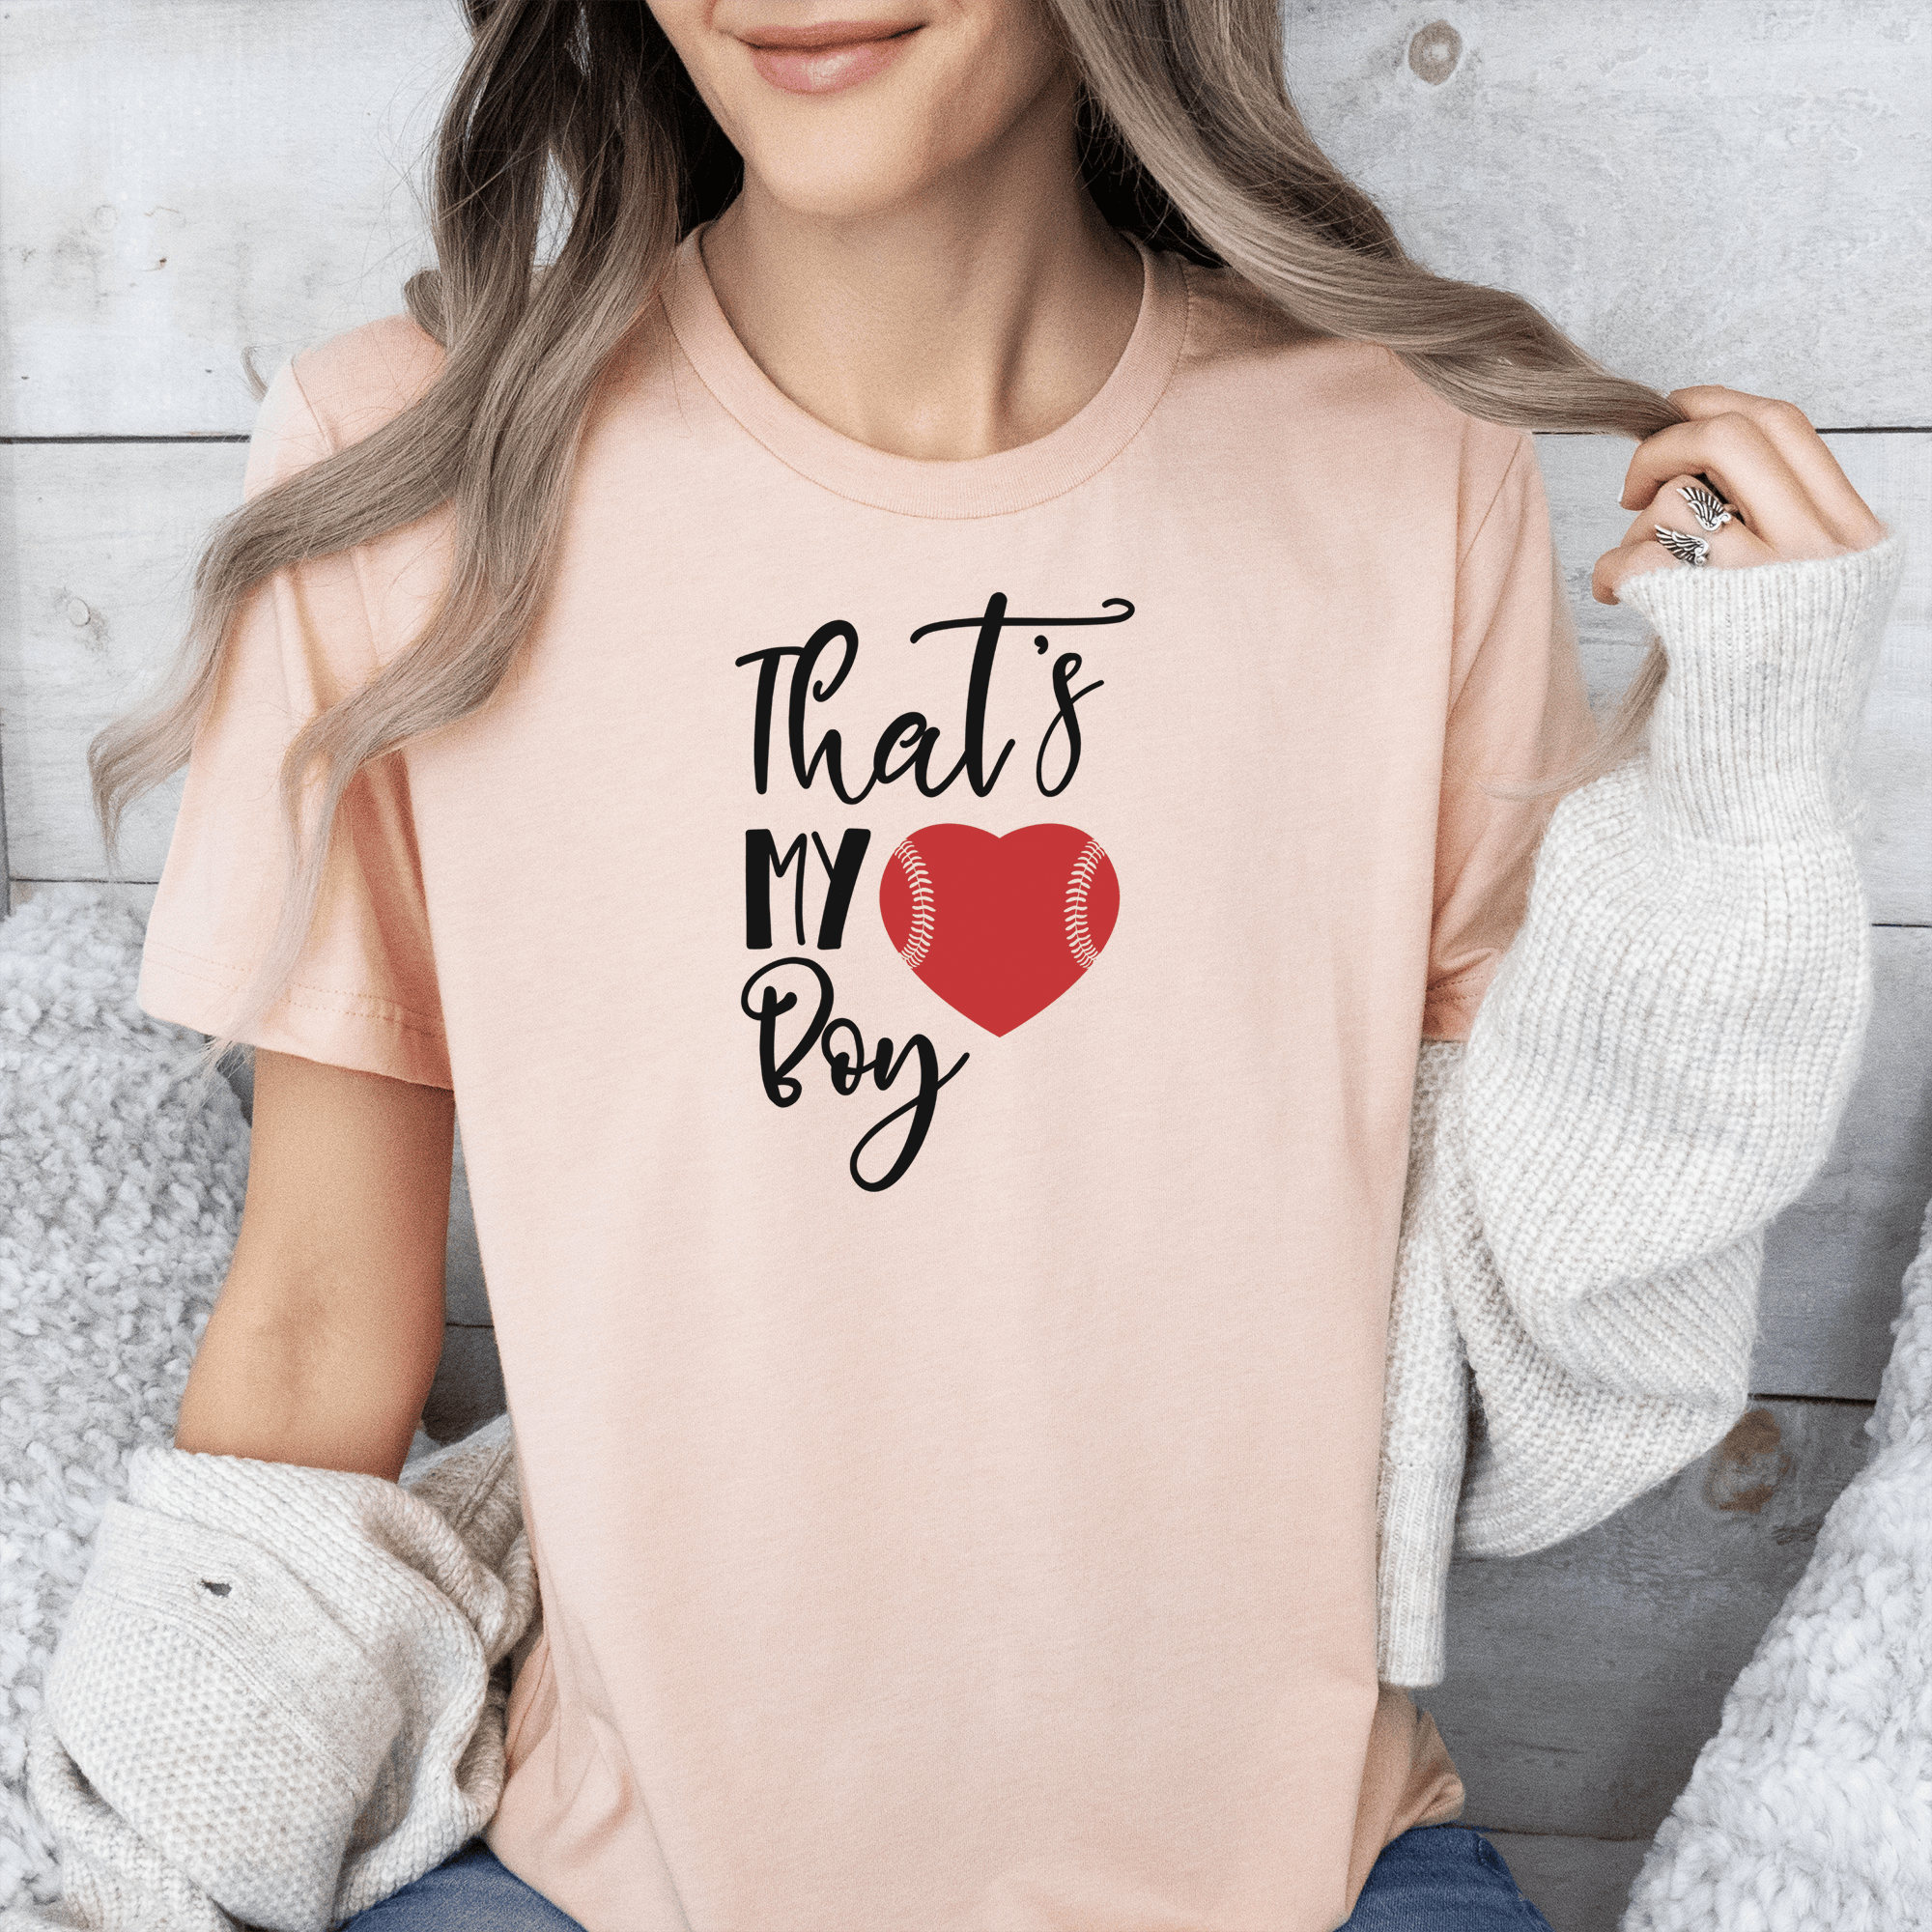 Womens Heather Peach T Shirt with Thats-My-Baseball-Boy design